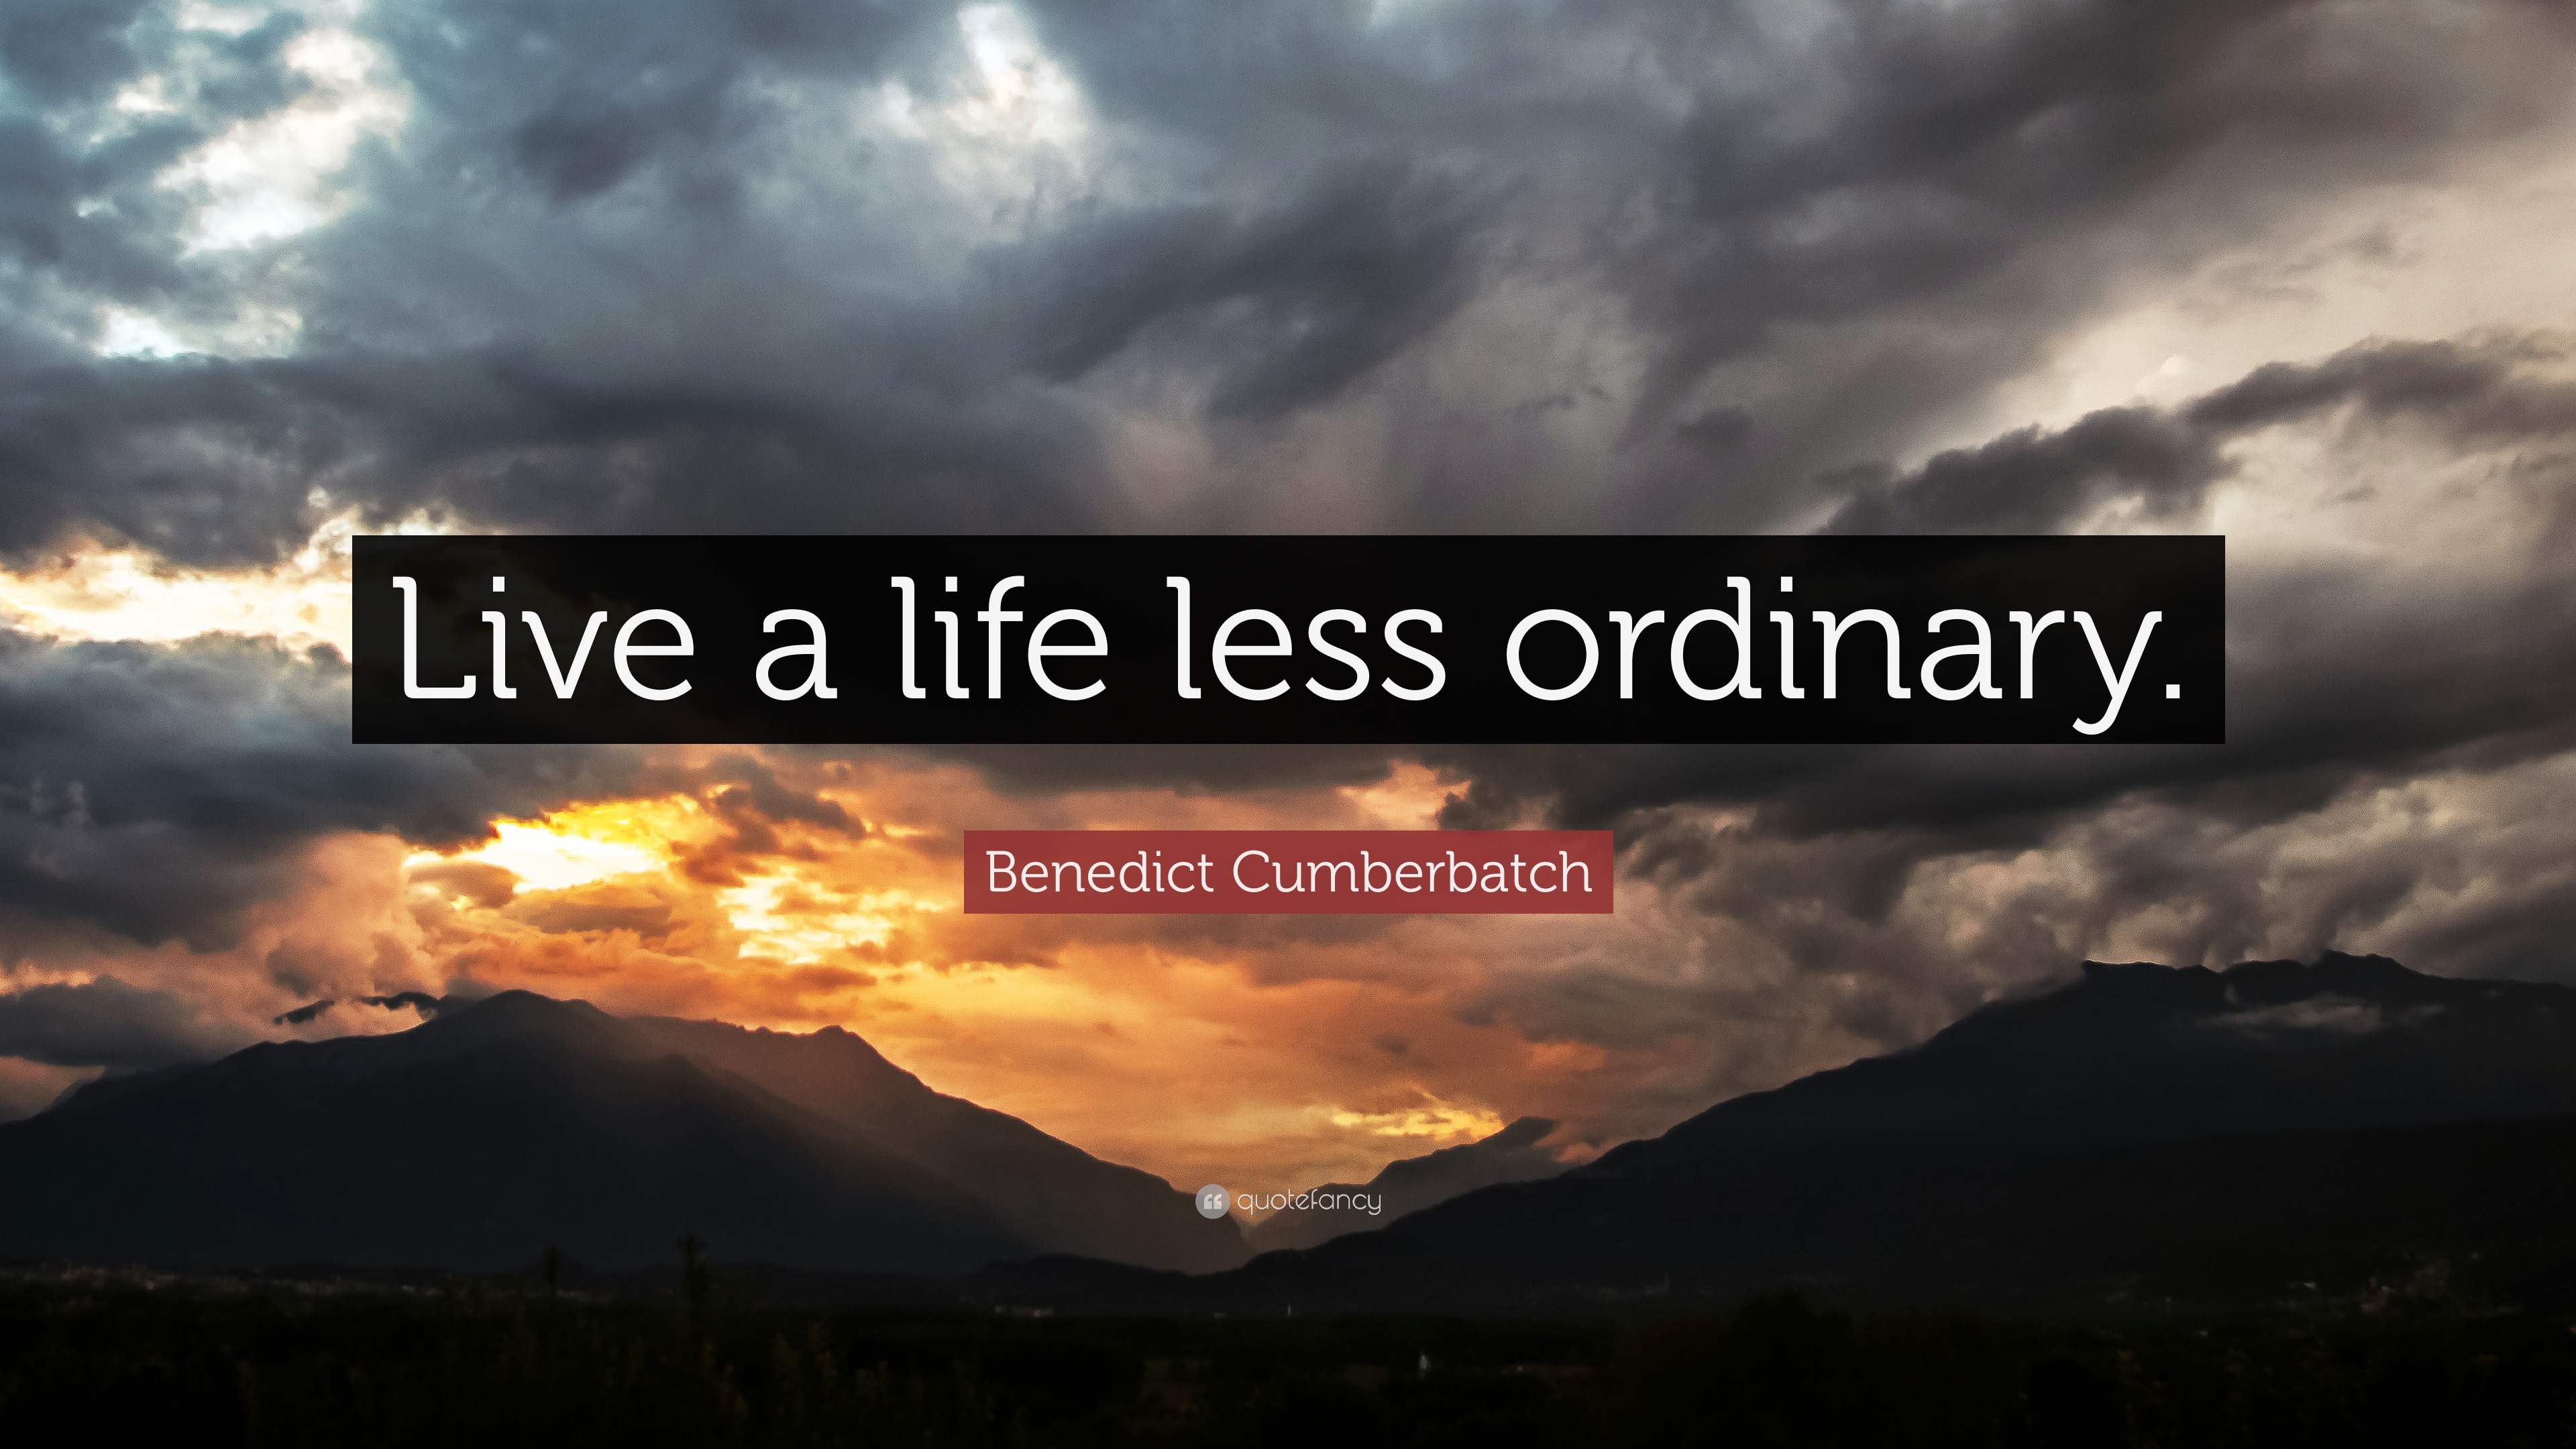 Benedict Cumberbatch Quote: “Live A Life Less Ordinary.”